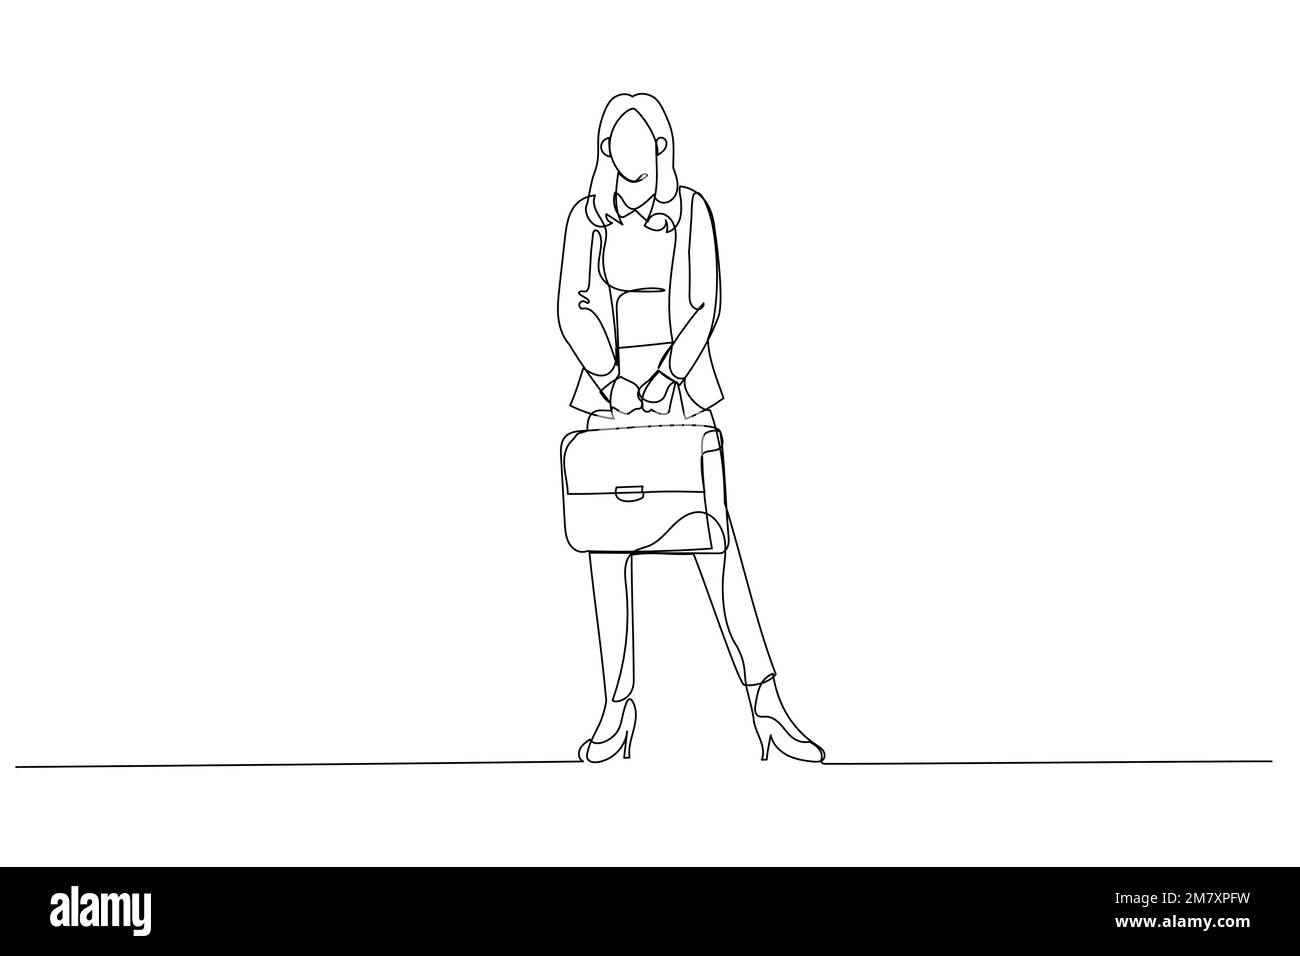 Illustration of businesswoman hold diplomat bag wear specs shirt checkered blazer trousers high heels. Single line art style Stock Vector